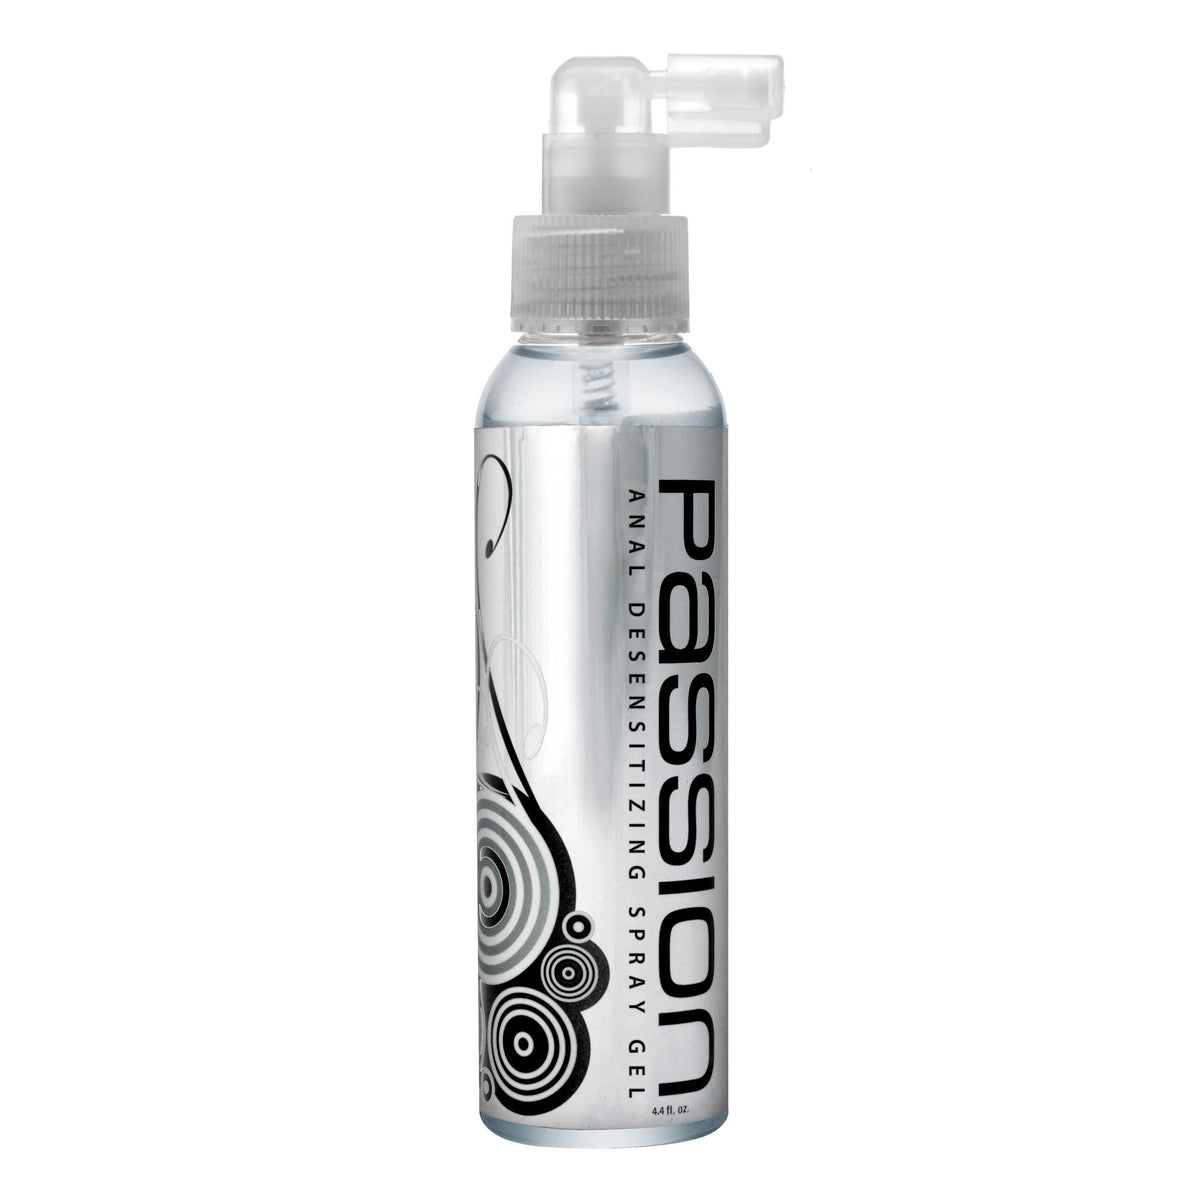 Passion Extra Strength Anal Desensitizing Spray Gel - 4.4 oz